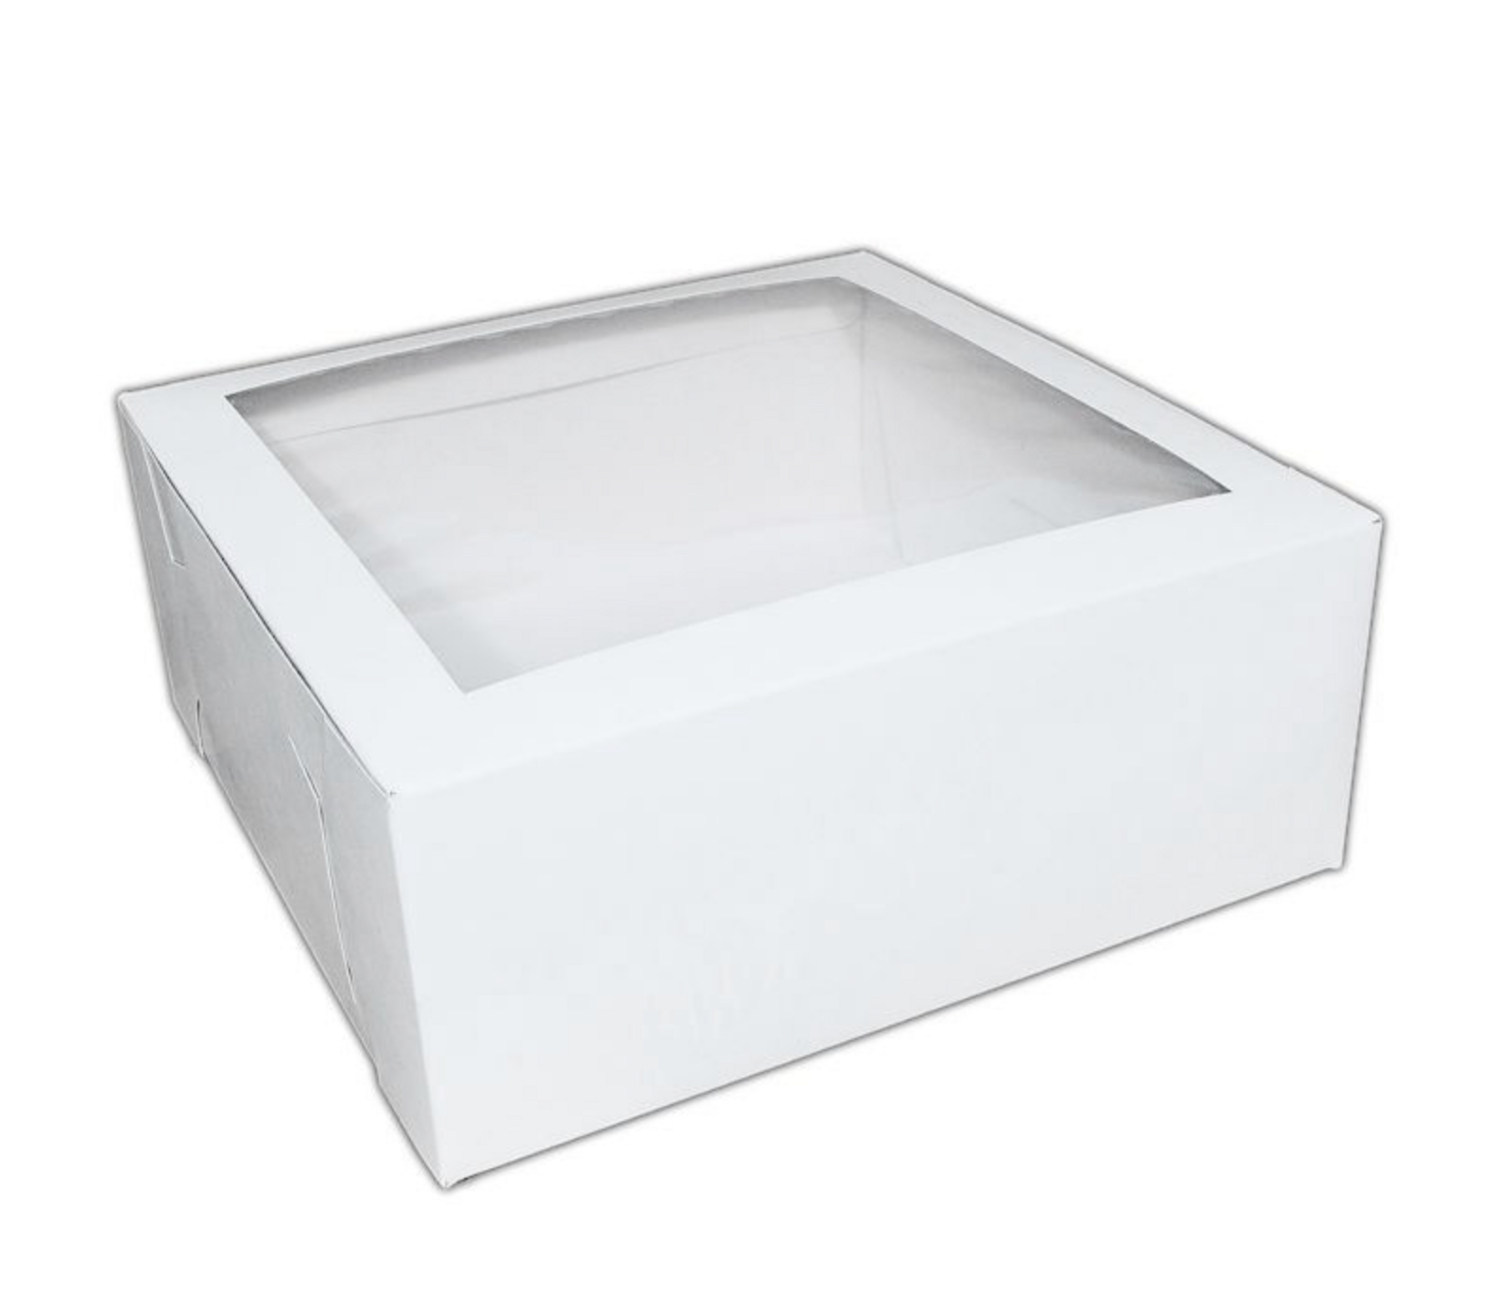 Cake Box With Window - Χαμηλό Κουτί με παράθυρο 30εκ ΜΟΝΟ ΓΙΑ ΠΑΡΑΛΑΒΗ ΑΠΟ ΤΟ CAKES BY SAMANTHA